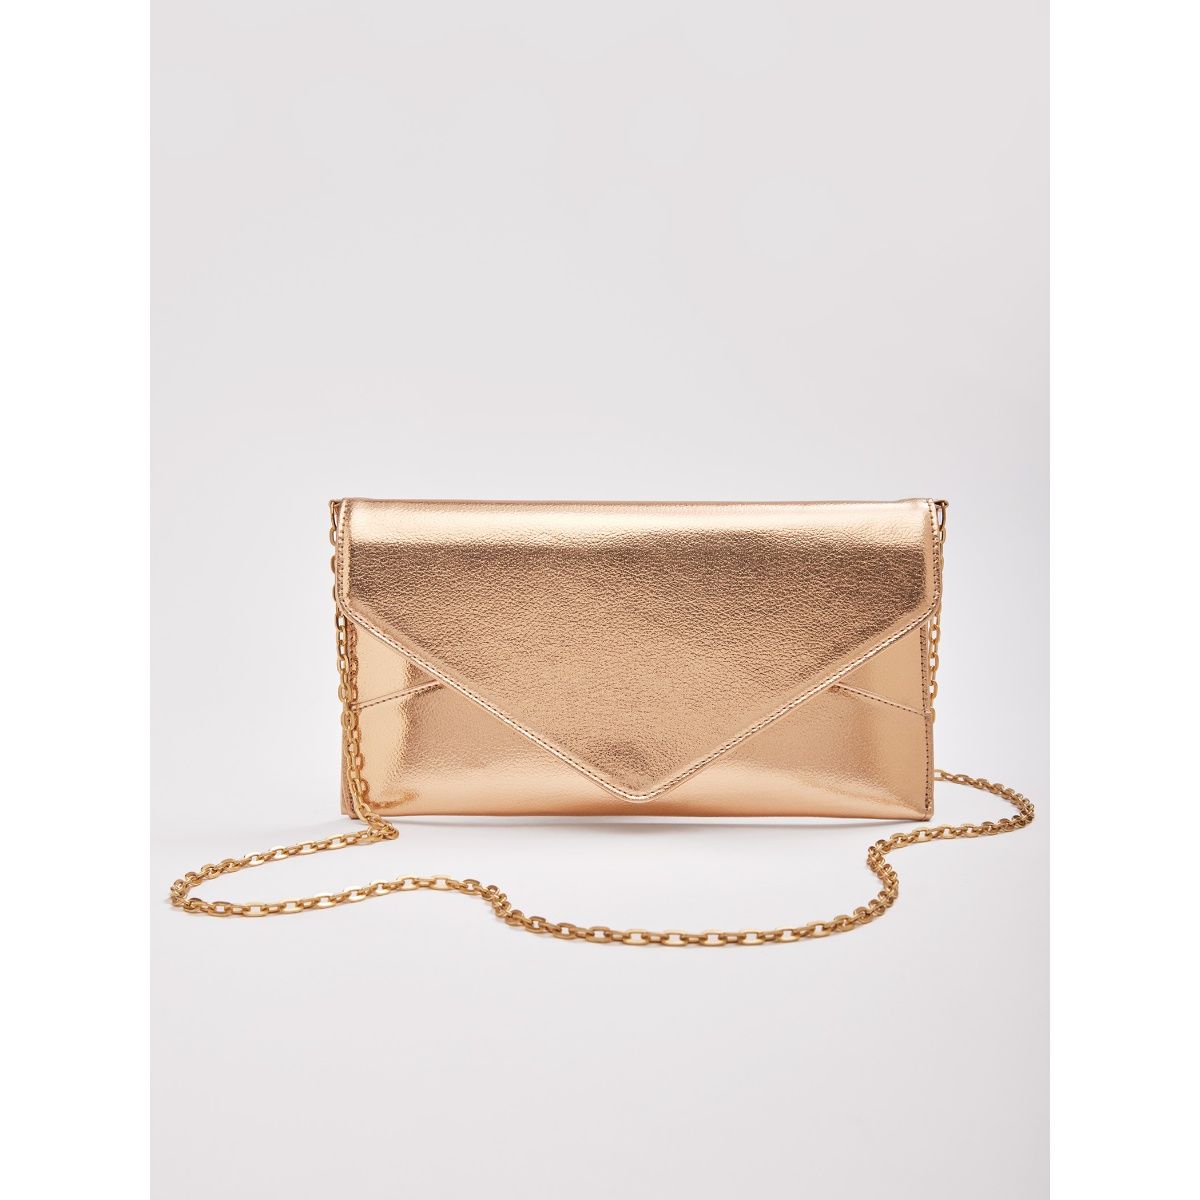 Big Buddha Clutch Purse Envelope Bag Gold Faux Leather Jeweled Beaded  Oversized | eBay